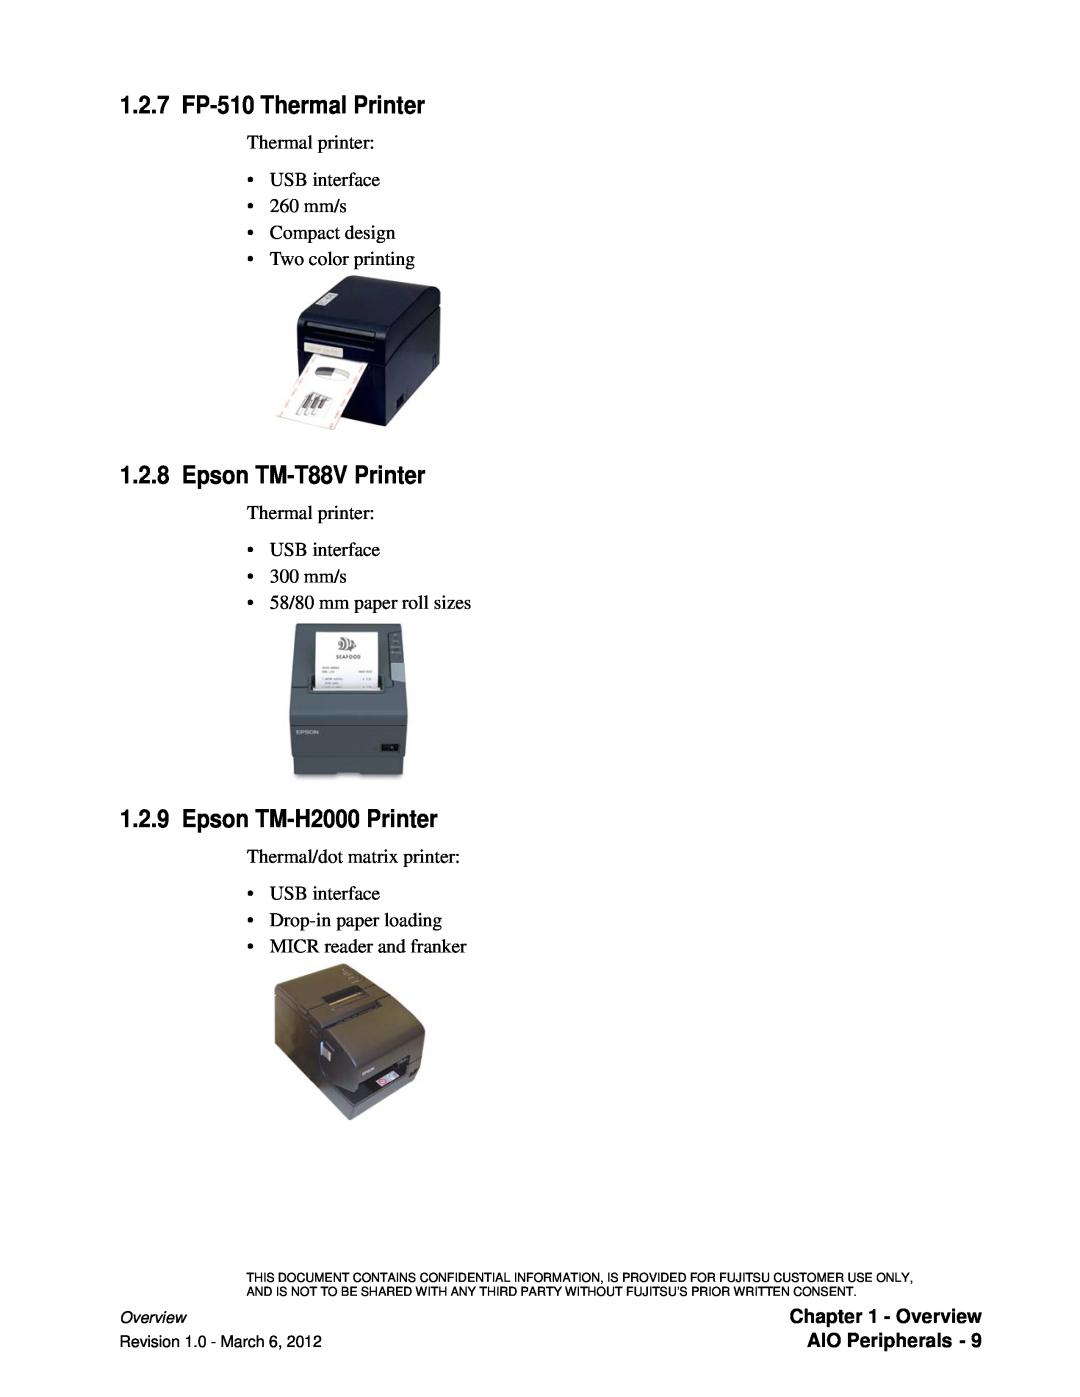 Fujitsu 7000 manual 1.2.7 FP-510 Thermal Printer, Epson TM-T88V Printer, Epson TM-H2000 Printer, AIO Peripherals 